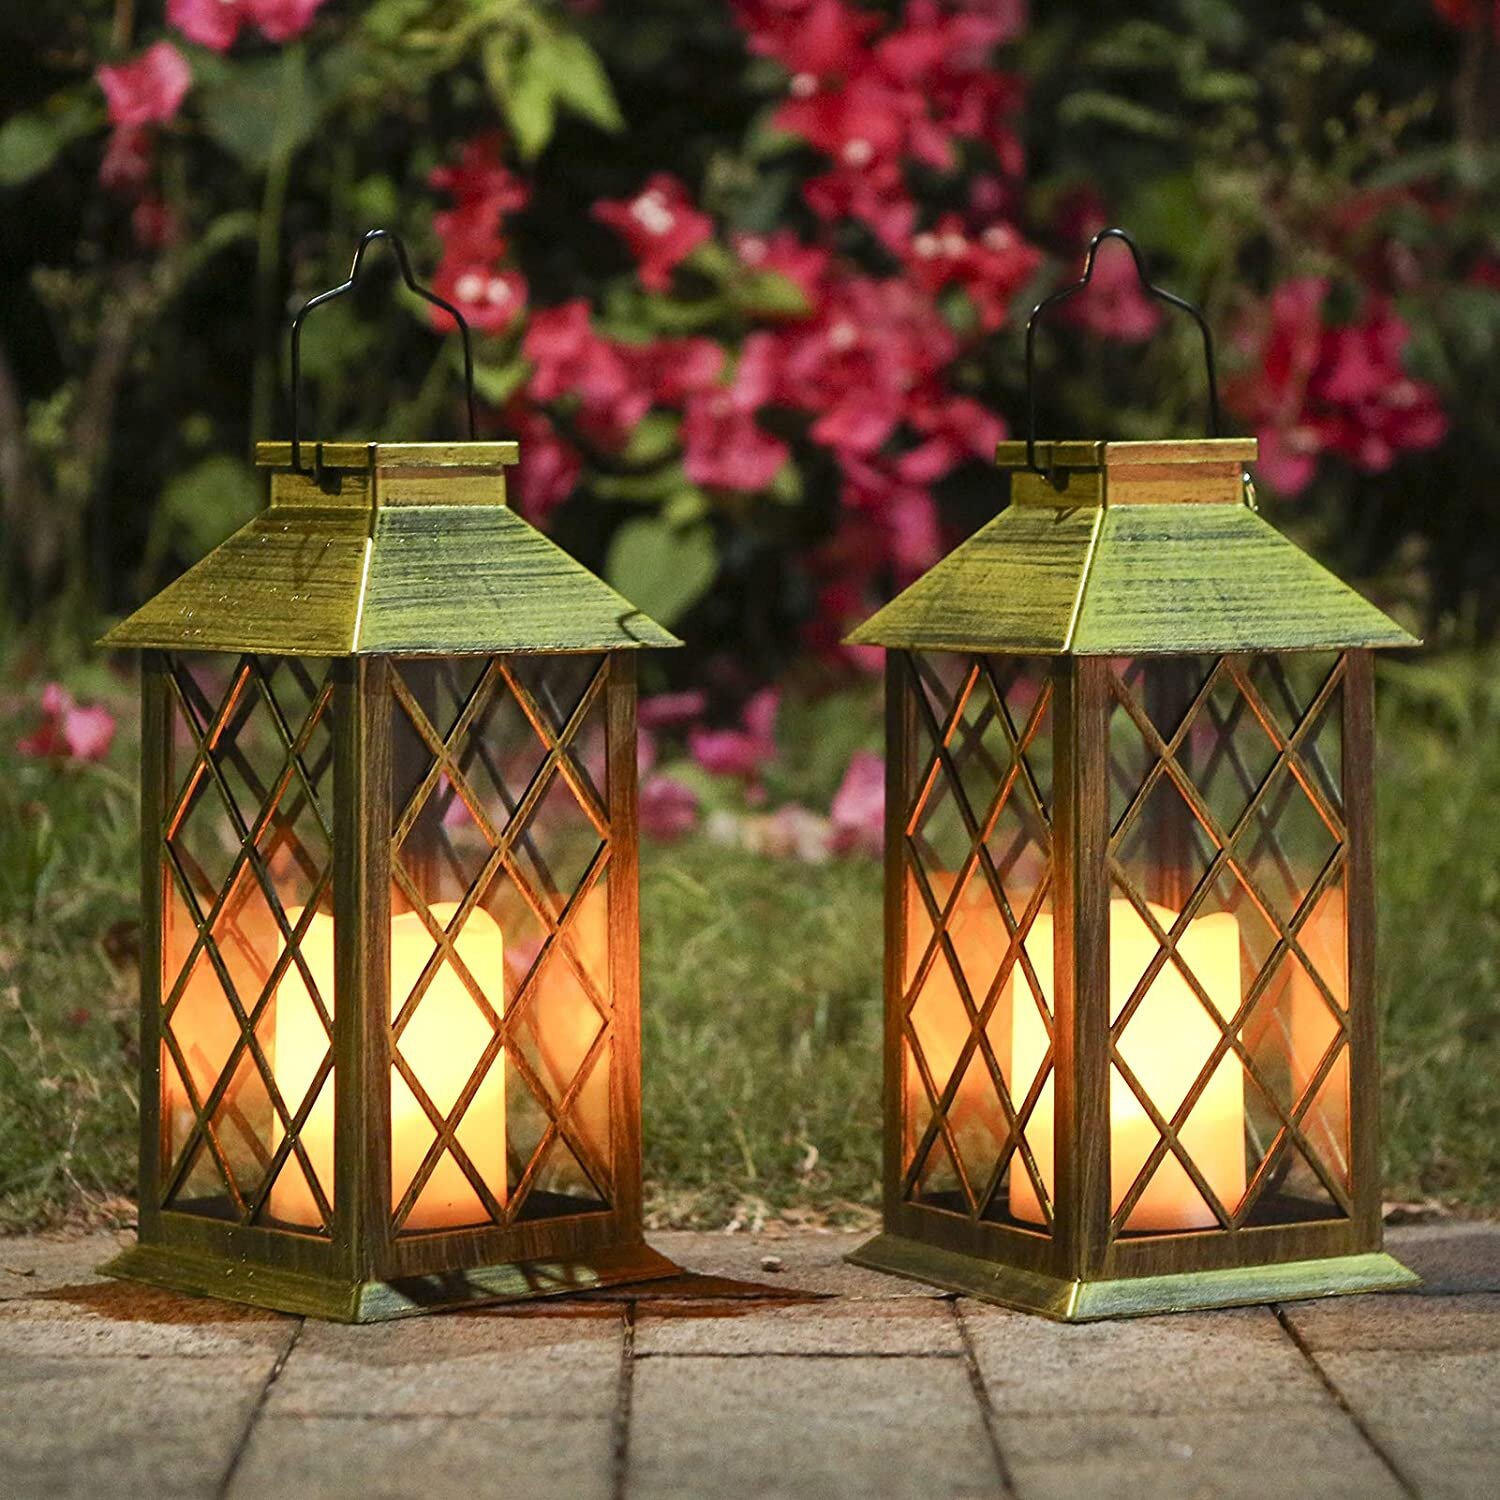 Solar LED Candle Light Flickering Home Garden Decorative Lamp Yard Landscape 